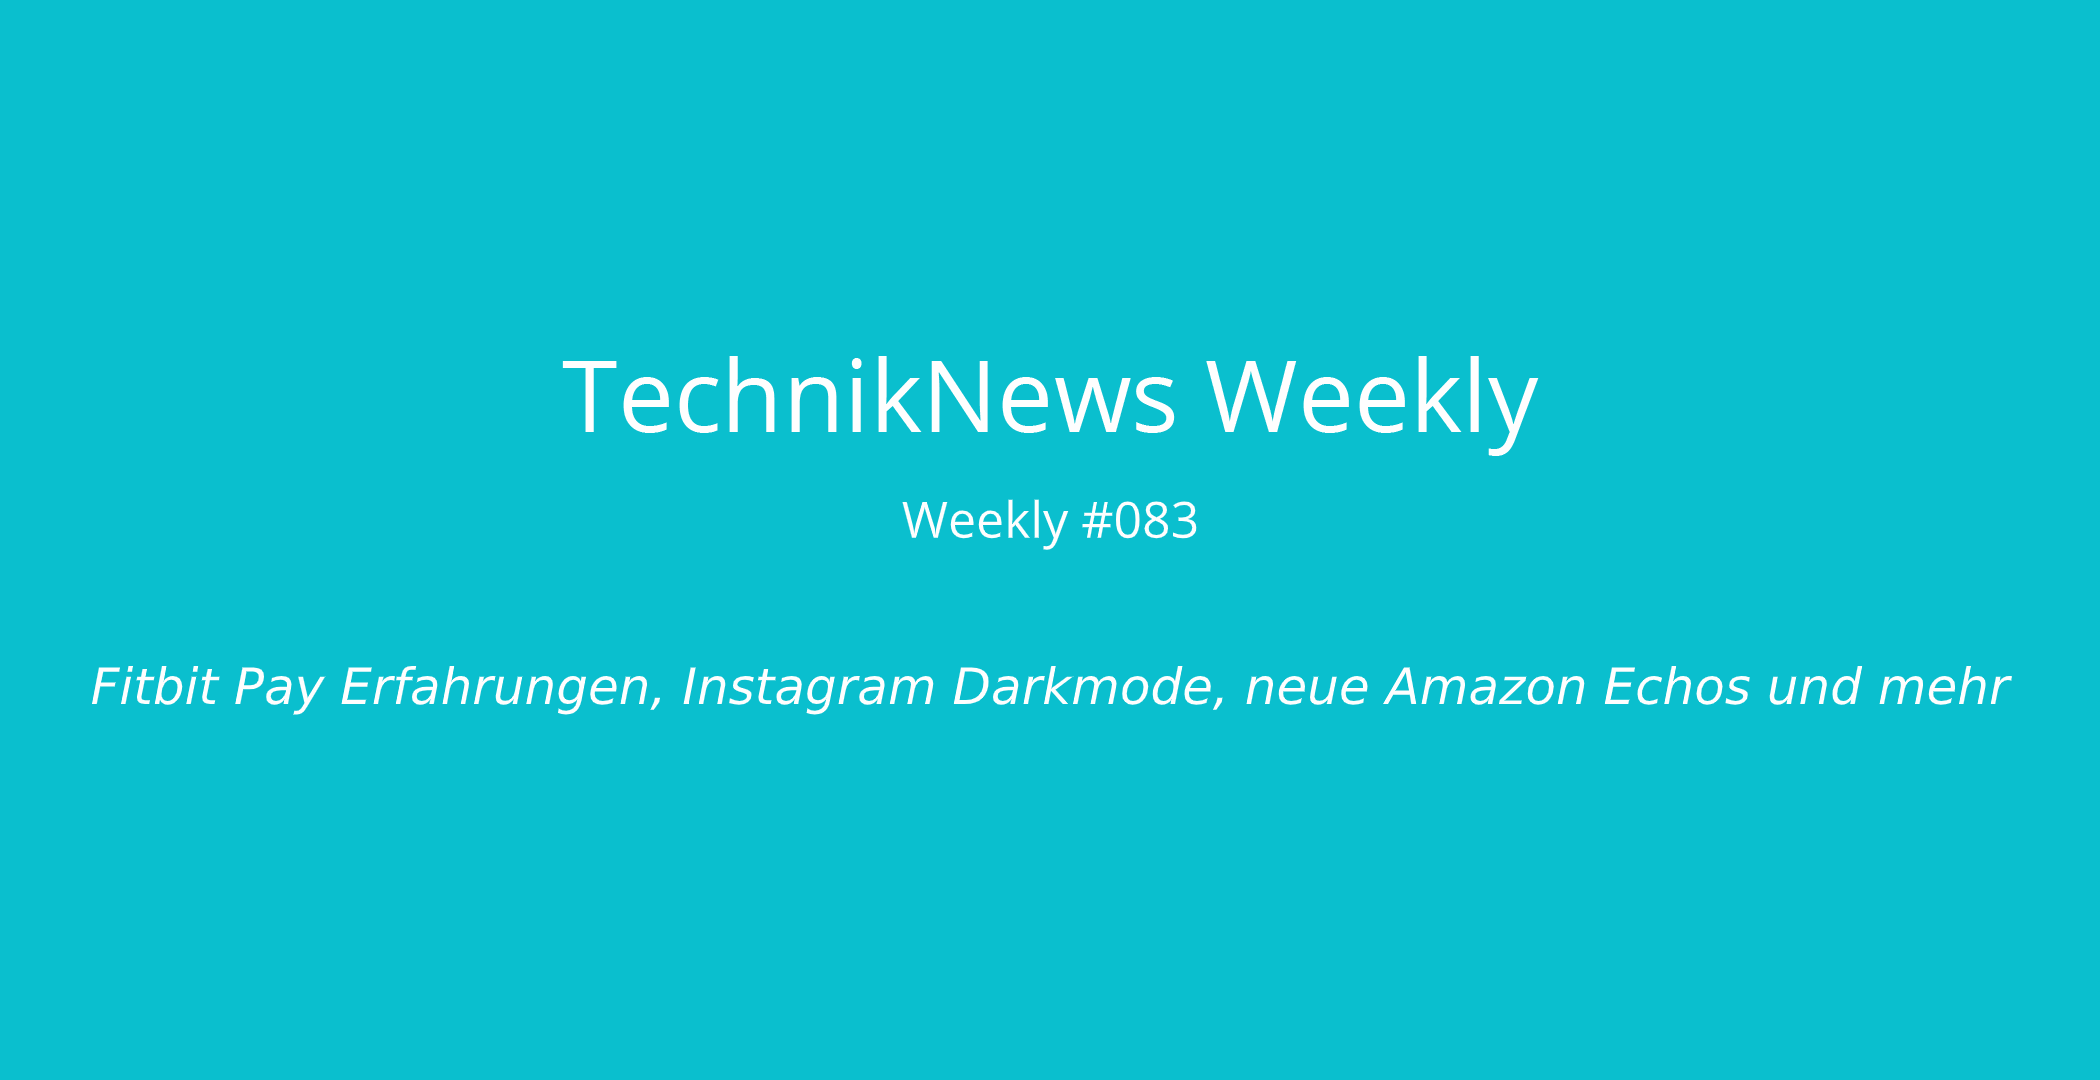 TechnikNews Weekly # 083